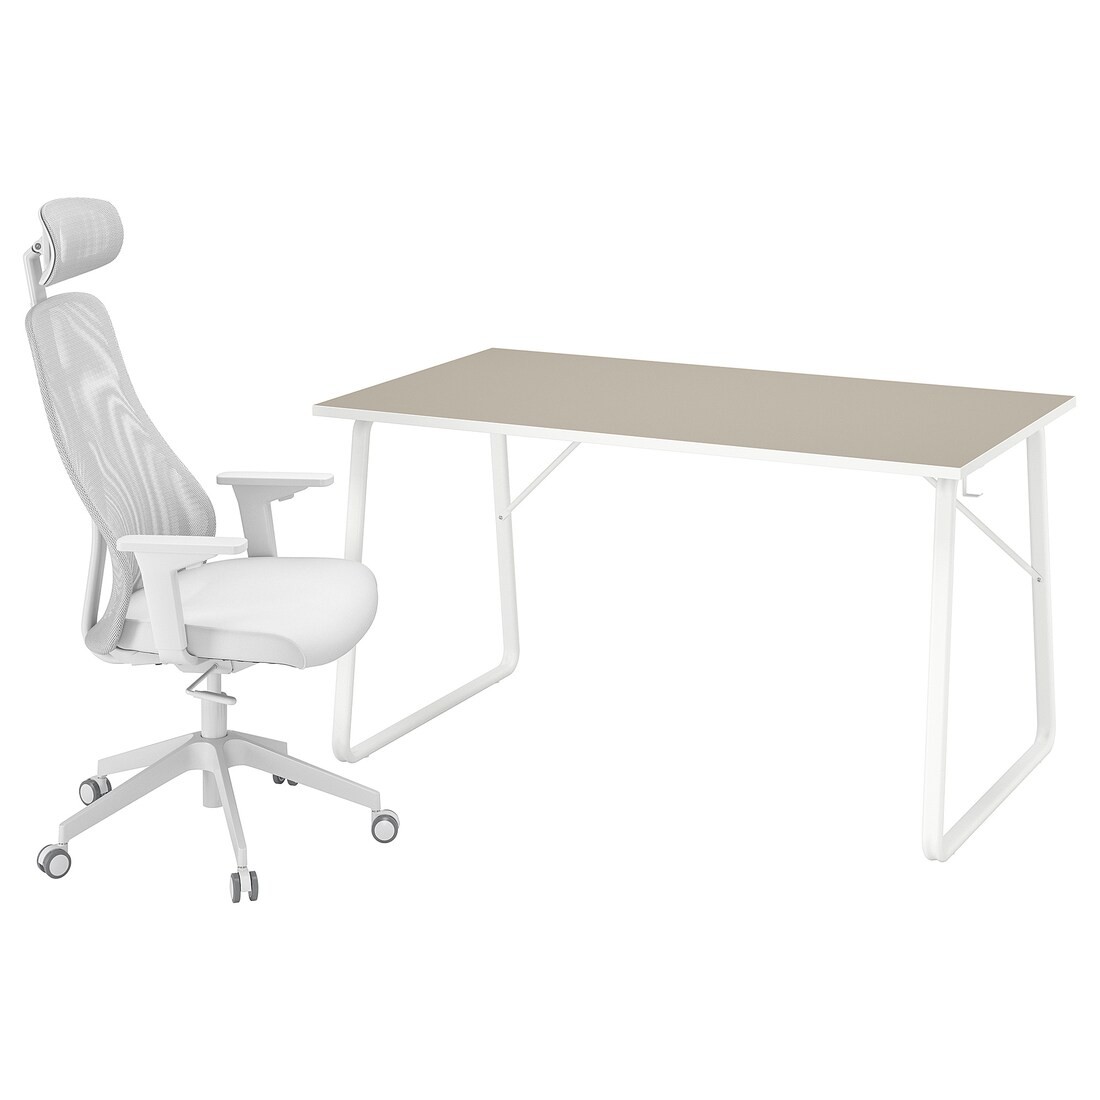 HUVUDSPELARE / MATCHSPEL Геймерський стіл та крісло, бежевий / світло-сірий